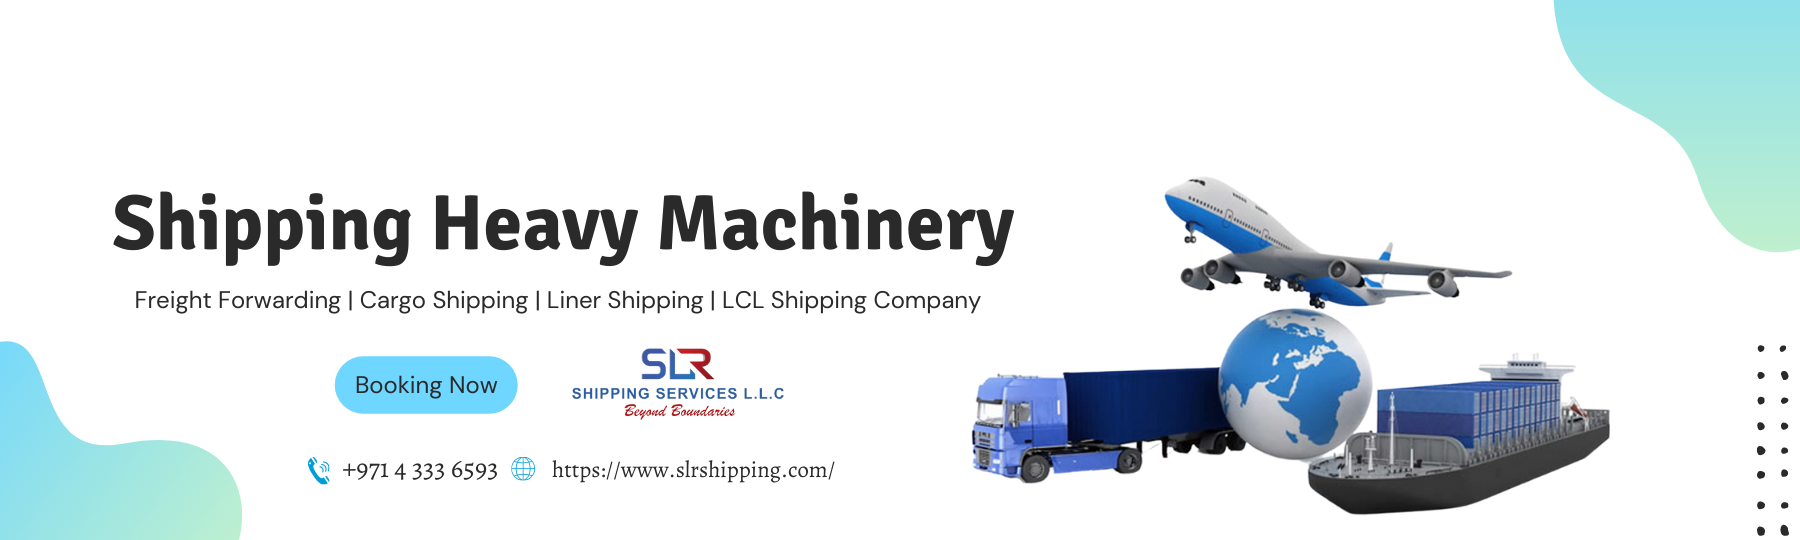 Shipping Heavy Machinery